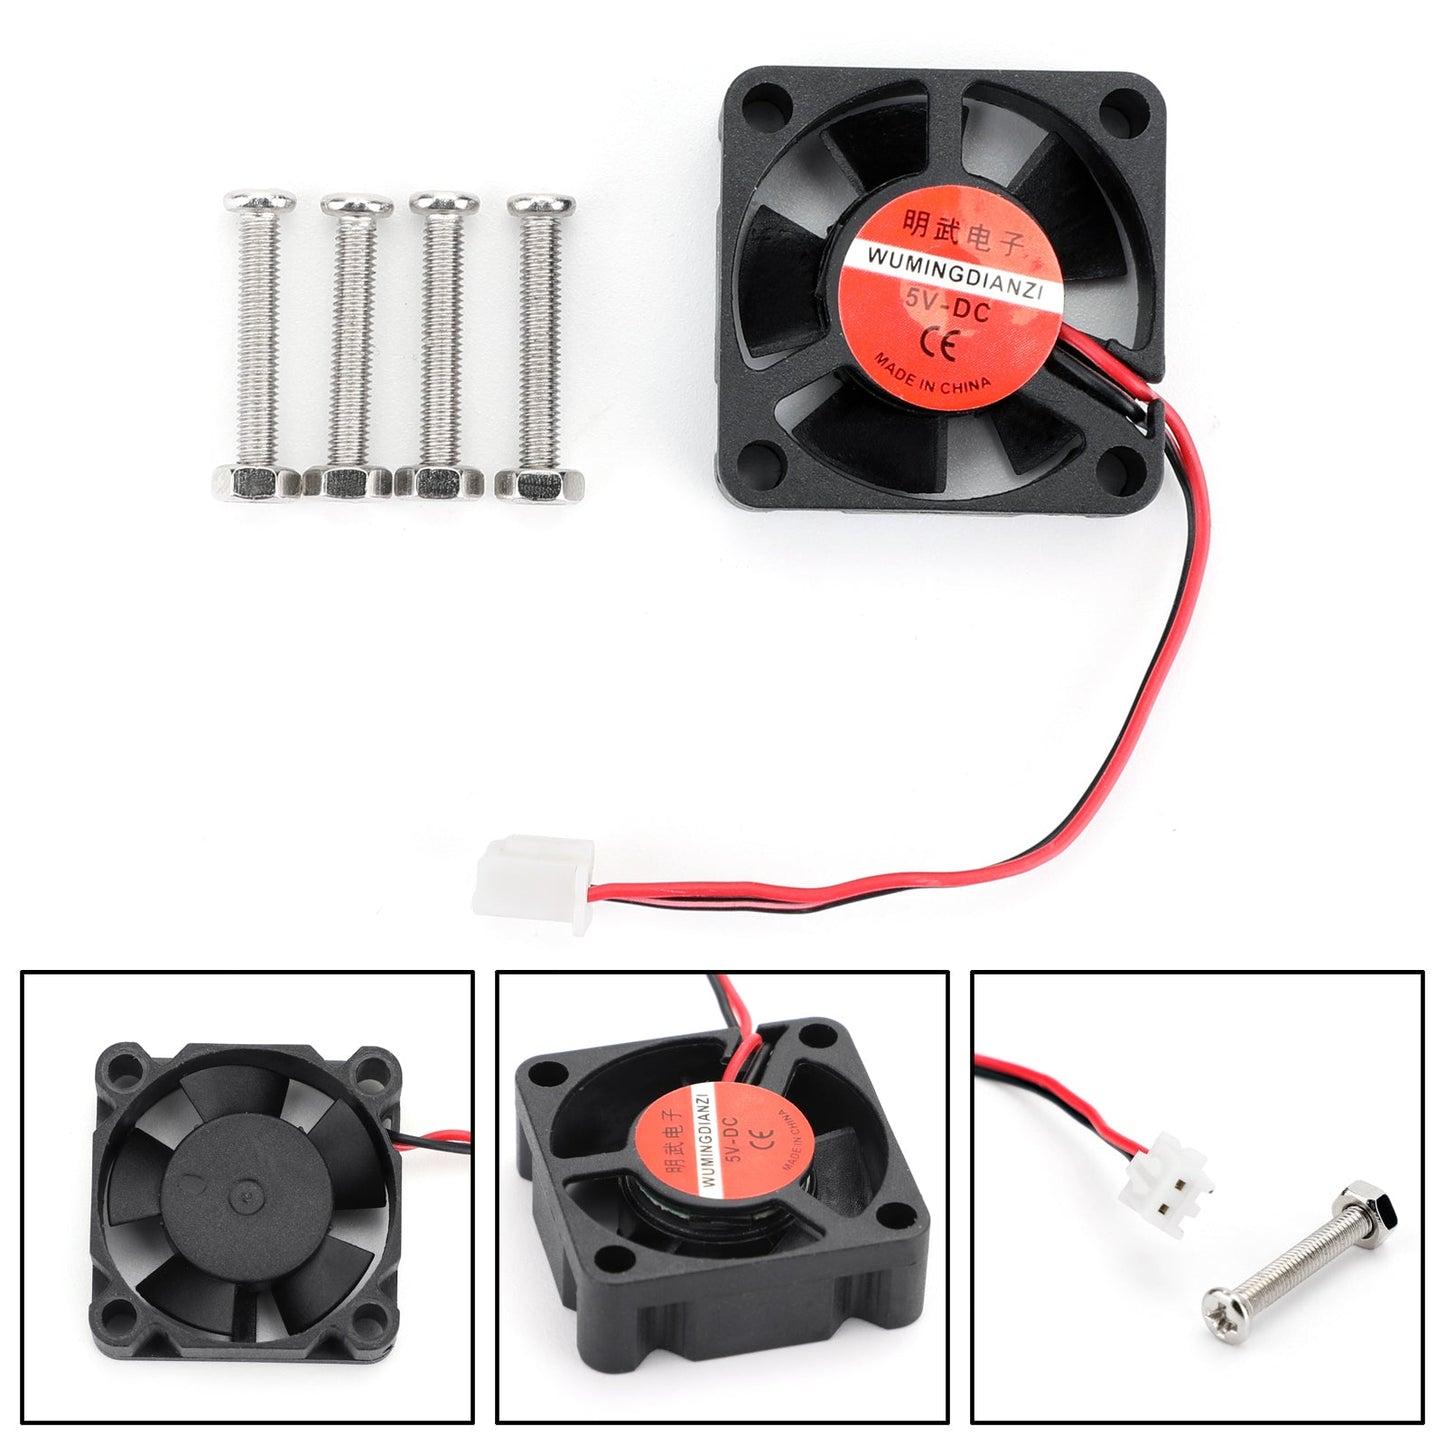 10x DC 5V 0.2A Cooler Cooling Fan for Raspberry Pi Model B+ / Raspberry Pi 2/3